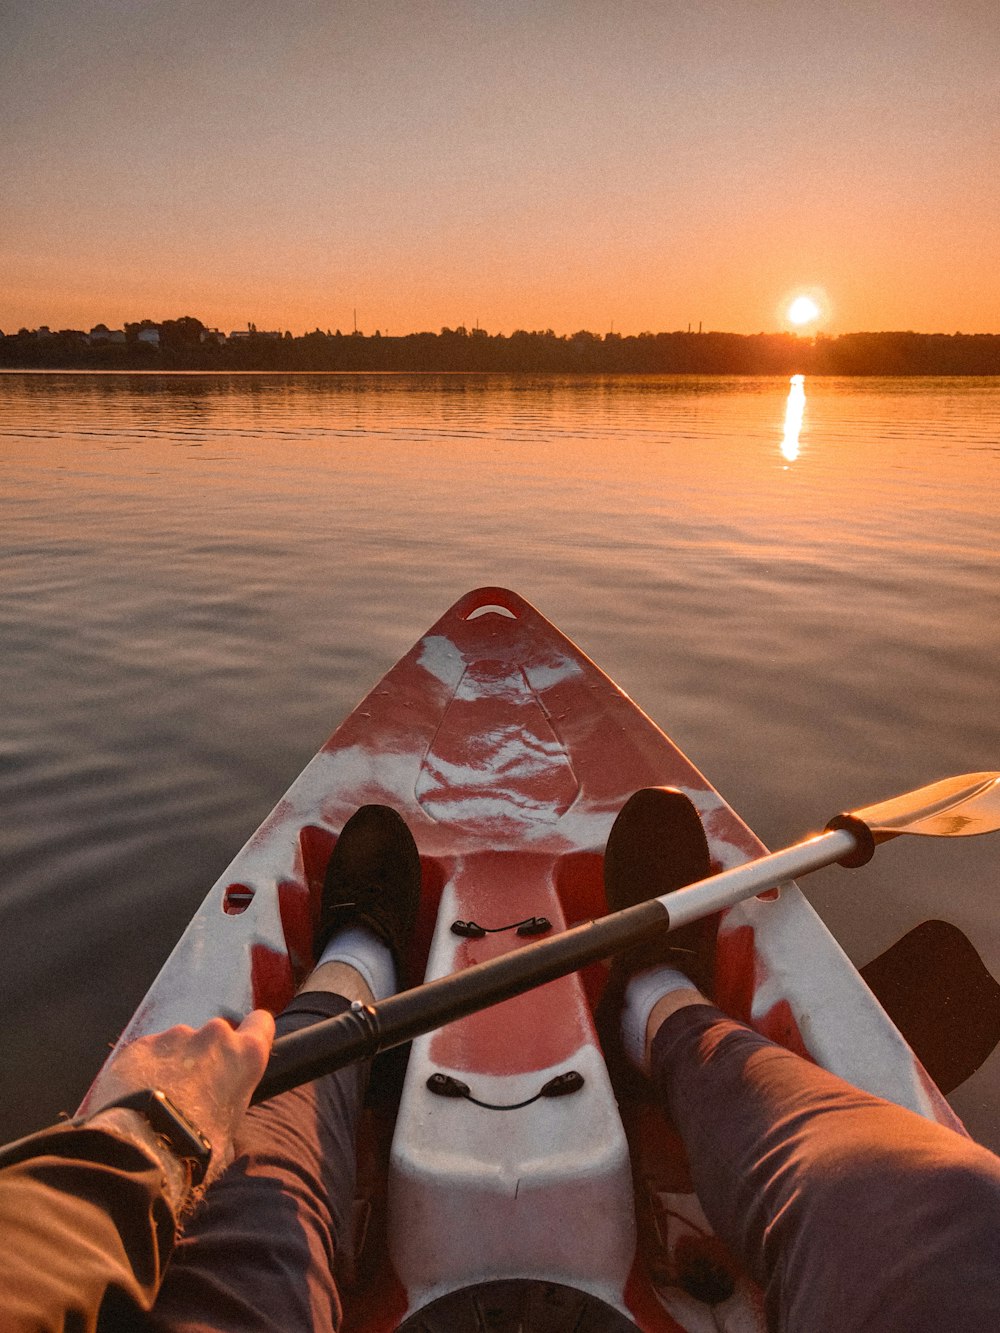 person in red kayak on lake during sunset